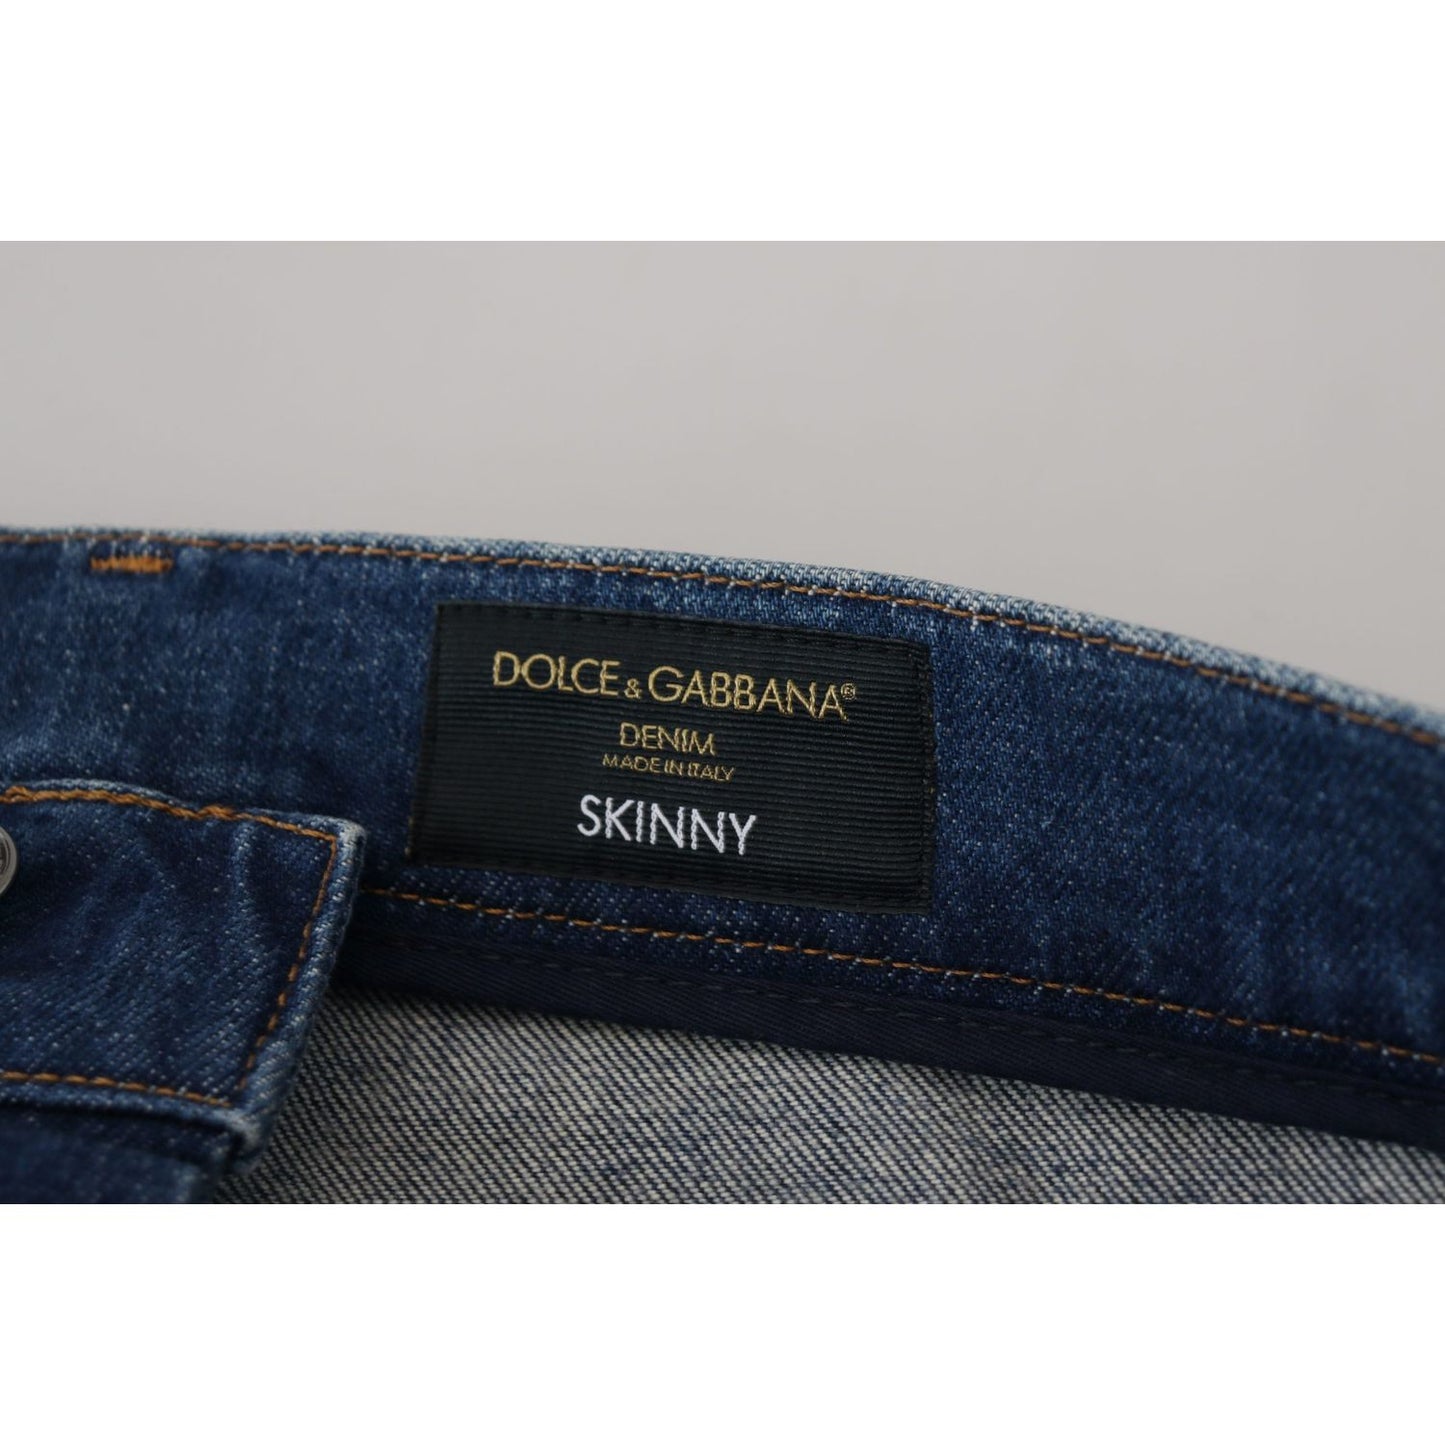 Dolce & Gabbana Elegant Slim Fit Italian Denim Jeans blue-wash-cotton-stretch-skinny-denim-jeans